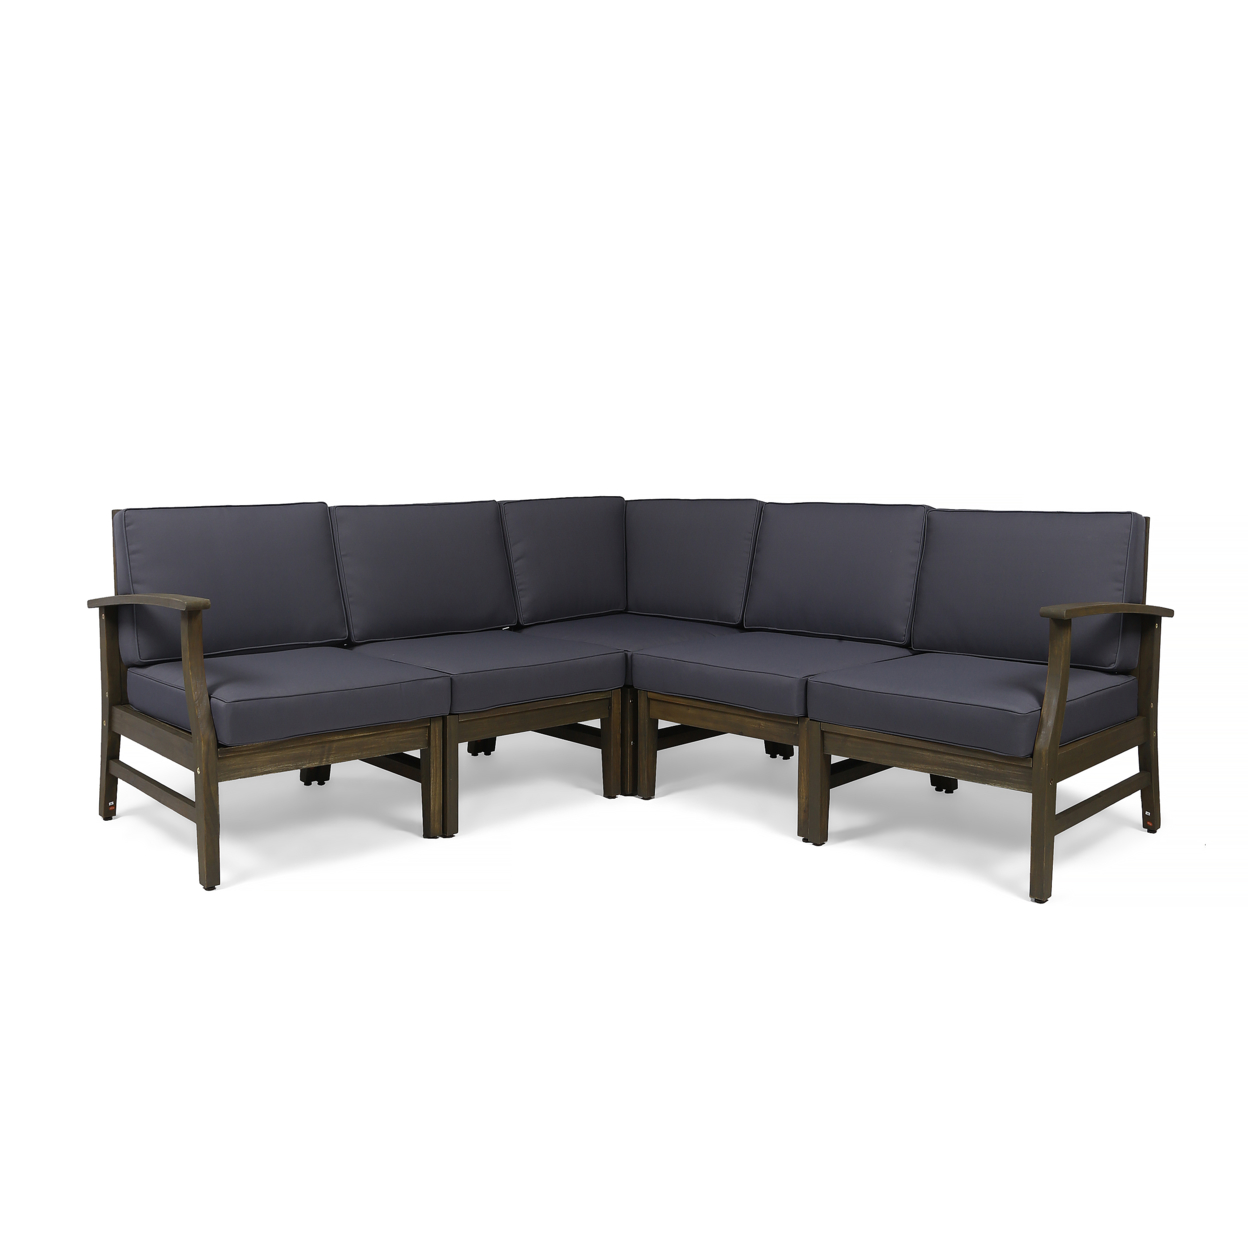 Capri Outdoor 5 Piece Acacia Wood Sectional Sofa Set - Gray Finish + Dark Gray